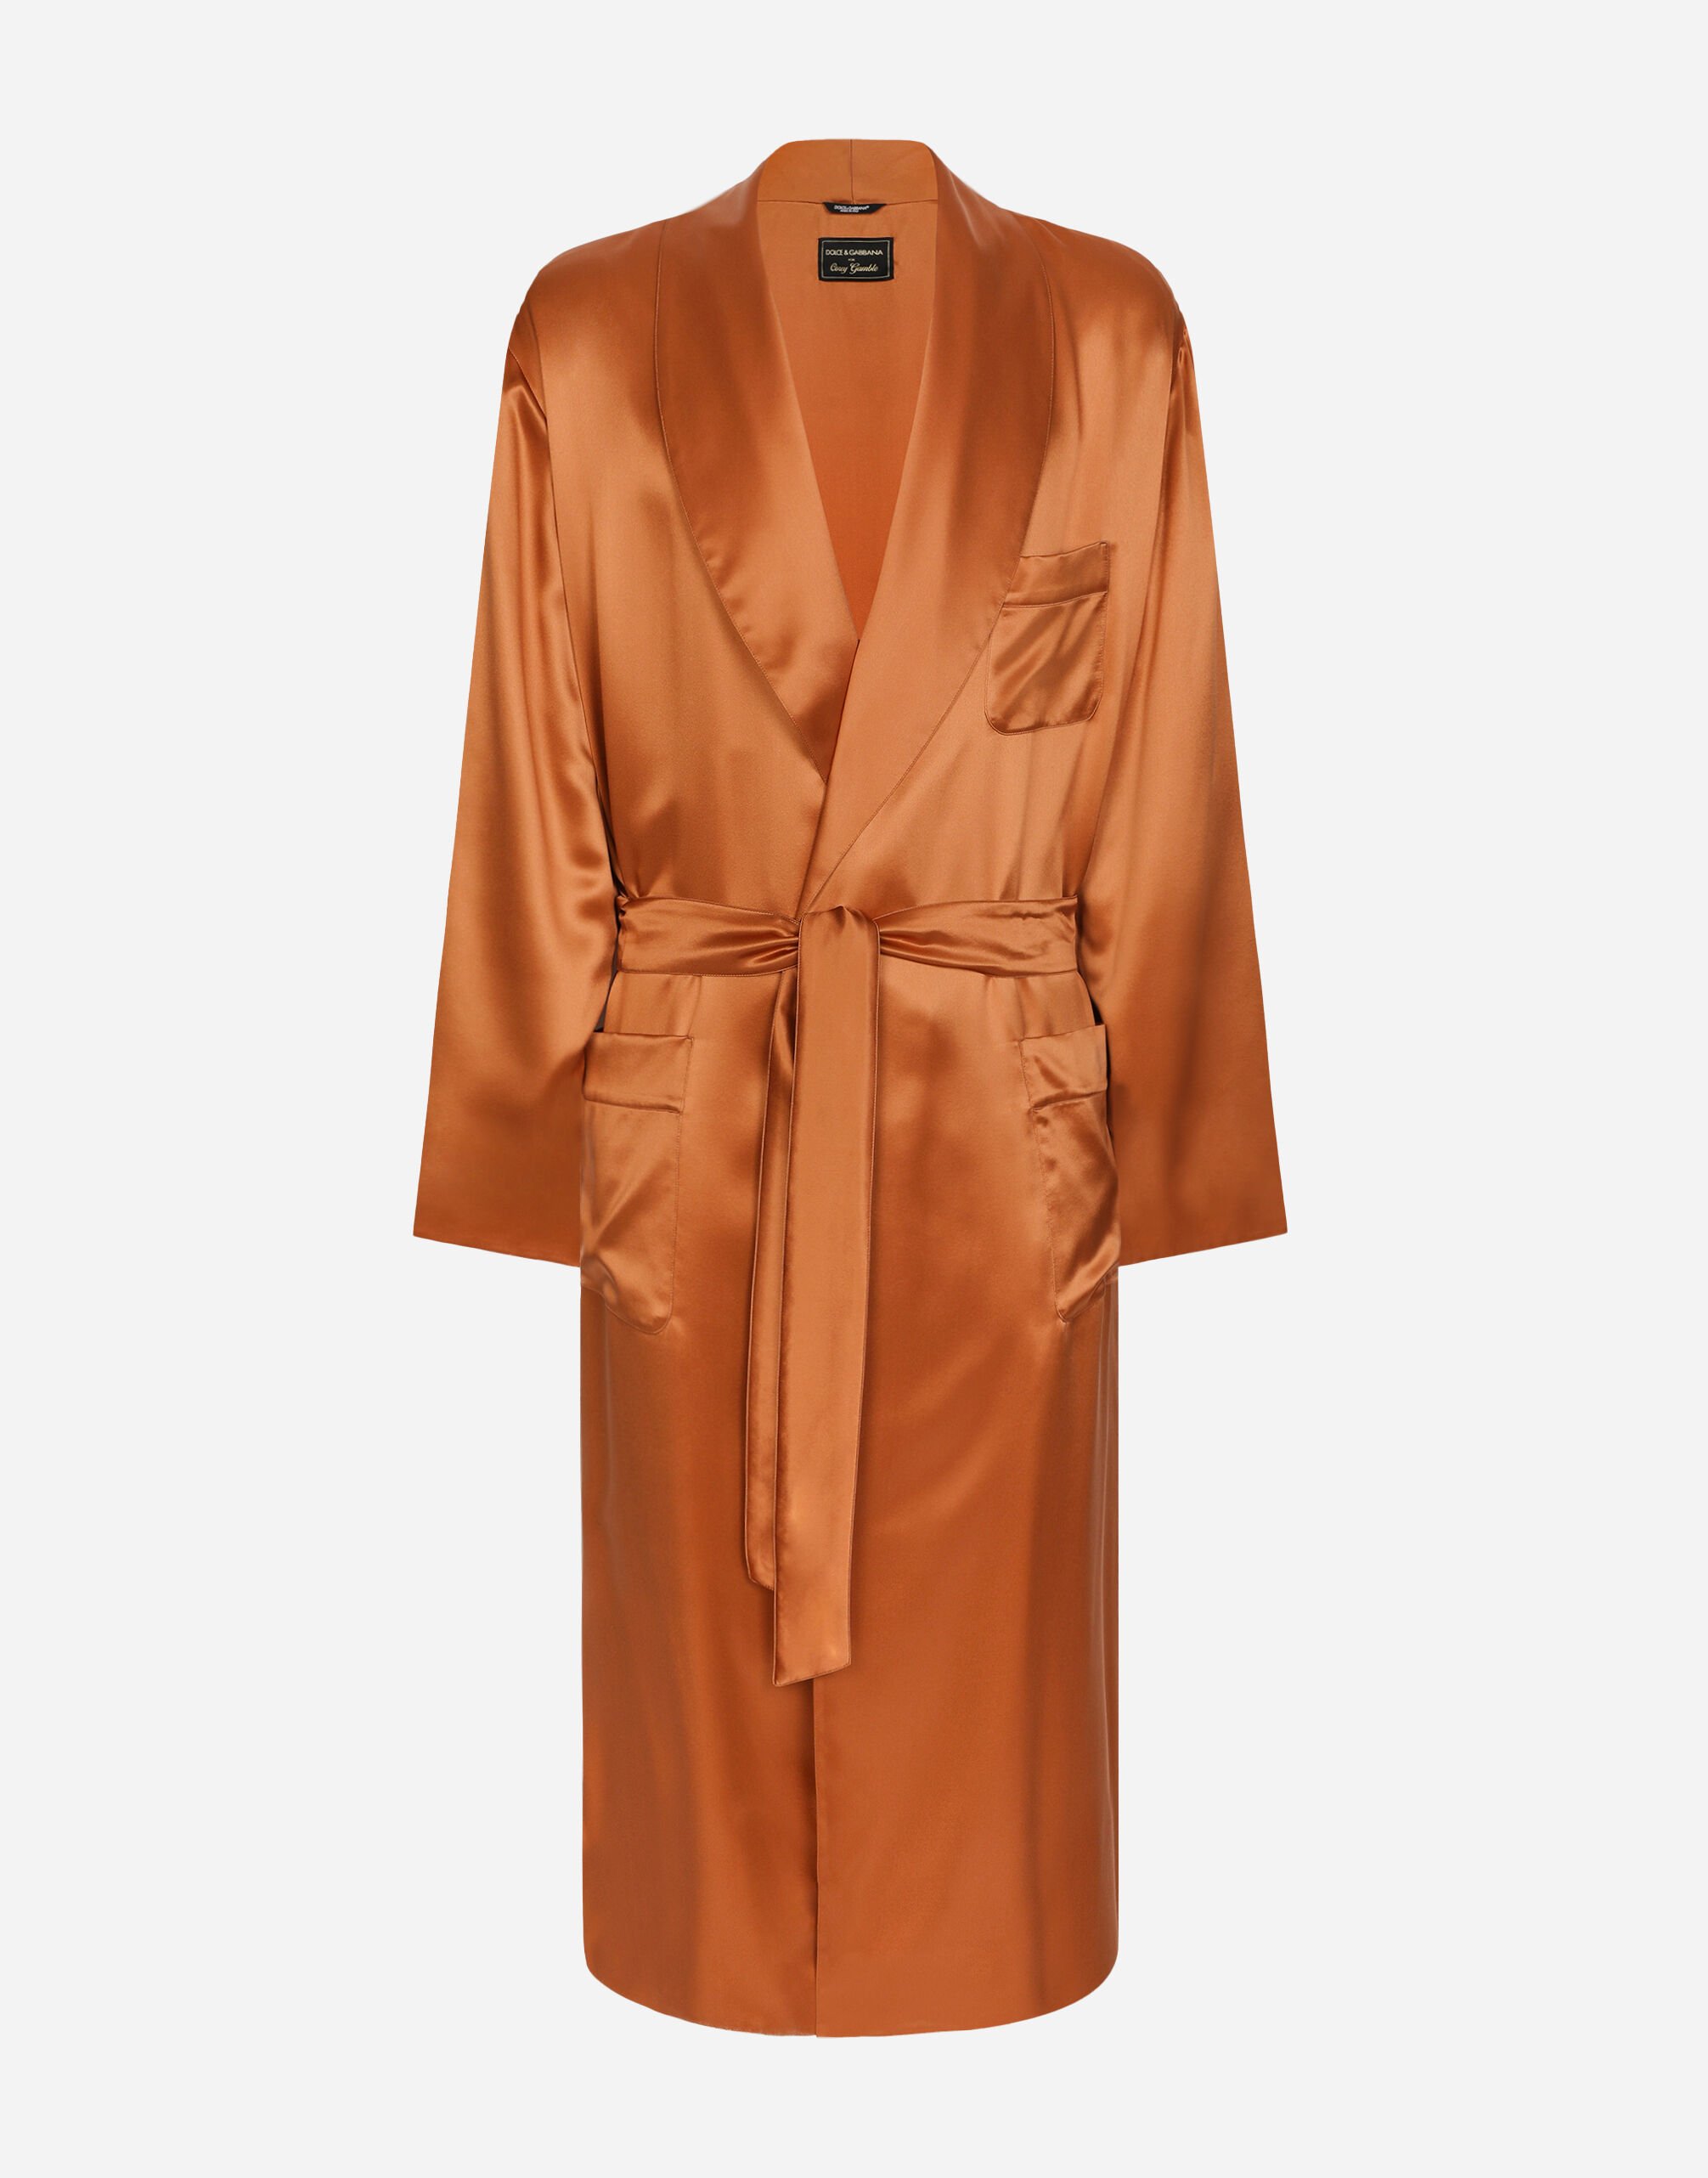 Dolce&Gabbana Silk satin robe with metal DG logo Pale Pink I5955MFU1AU